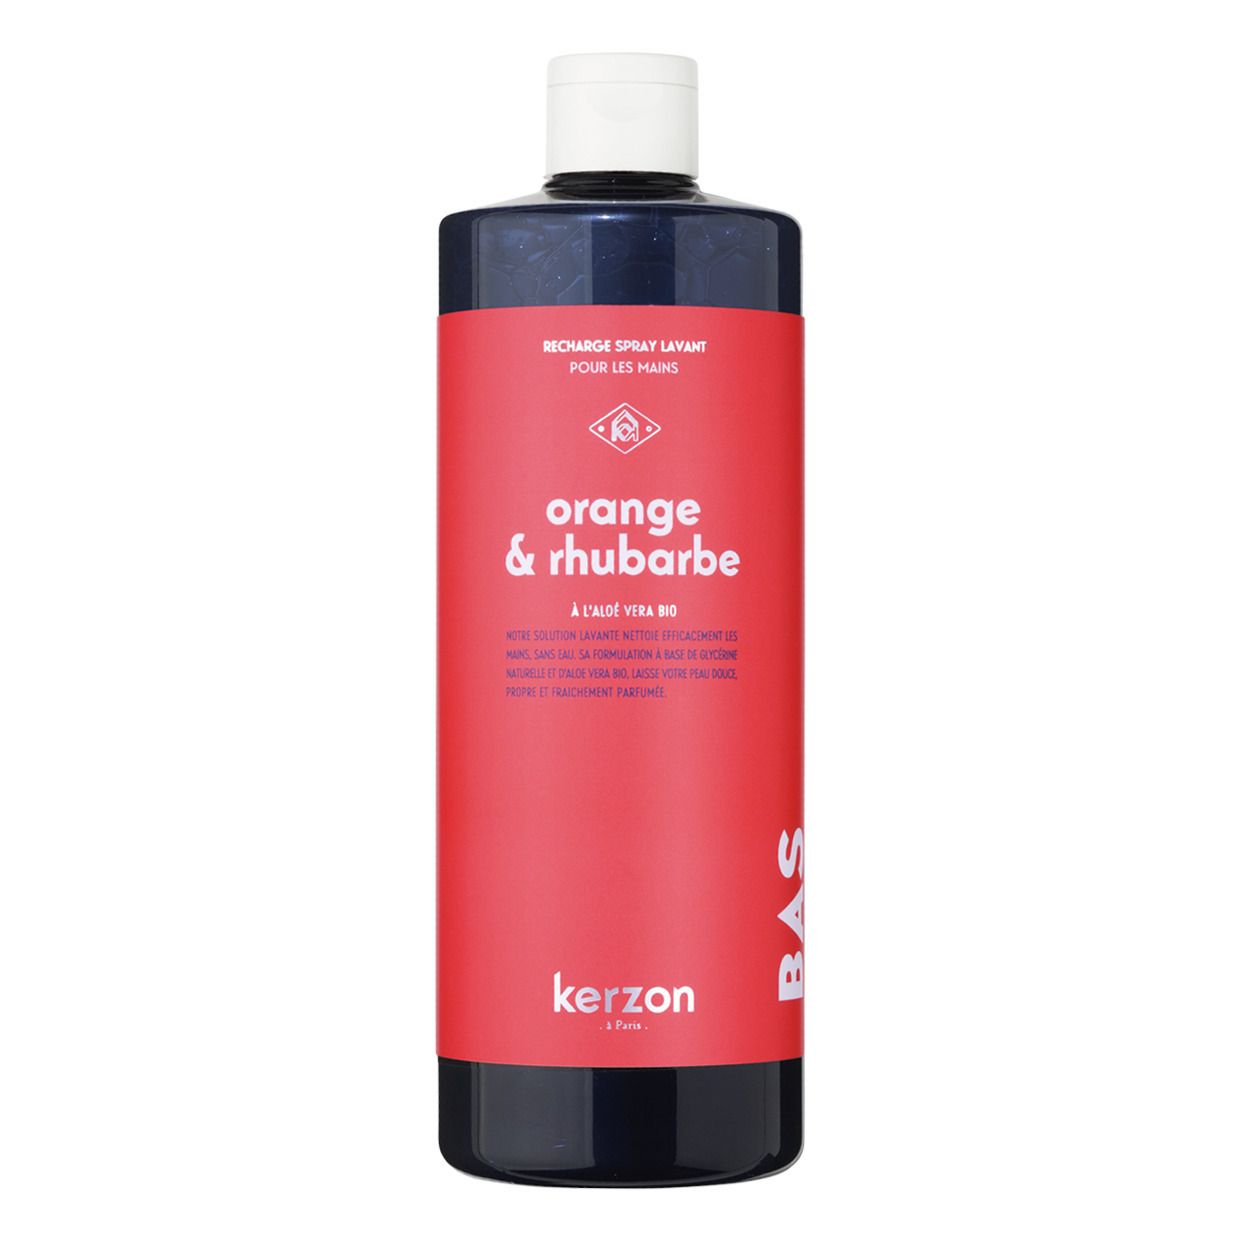 Kerzon - Recharge spray lavant orange & rhubarbe - 500ml - Rouge